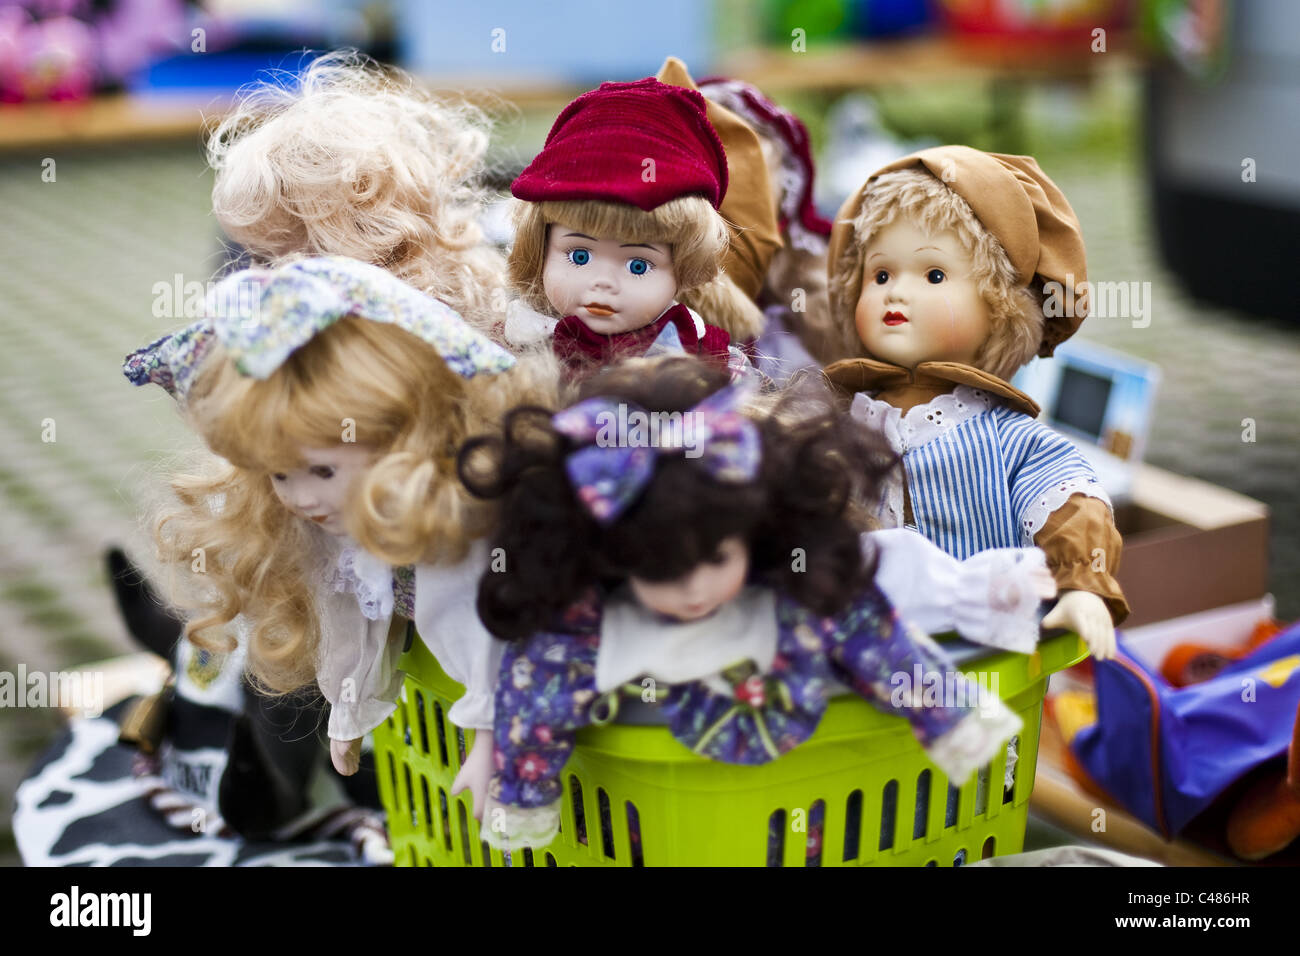 flea market dolls Stock Photo